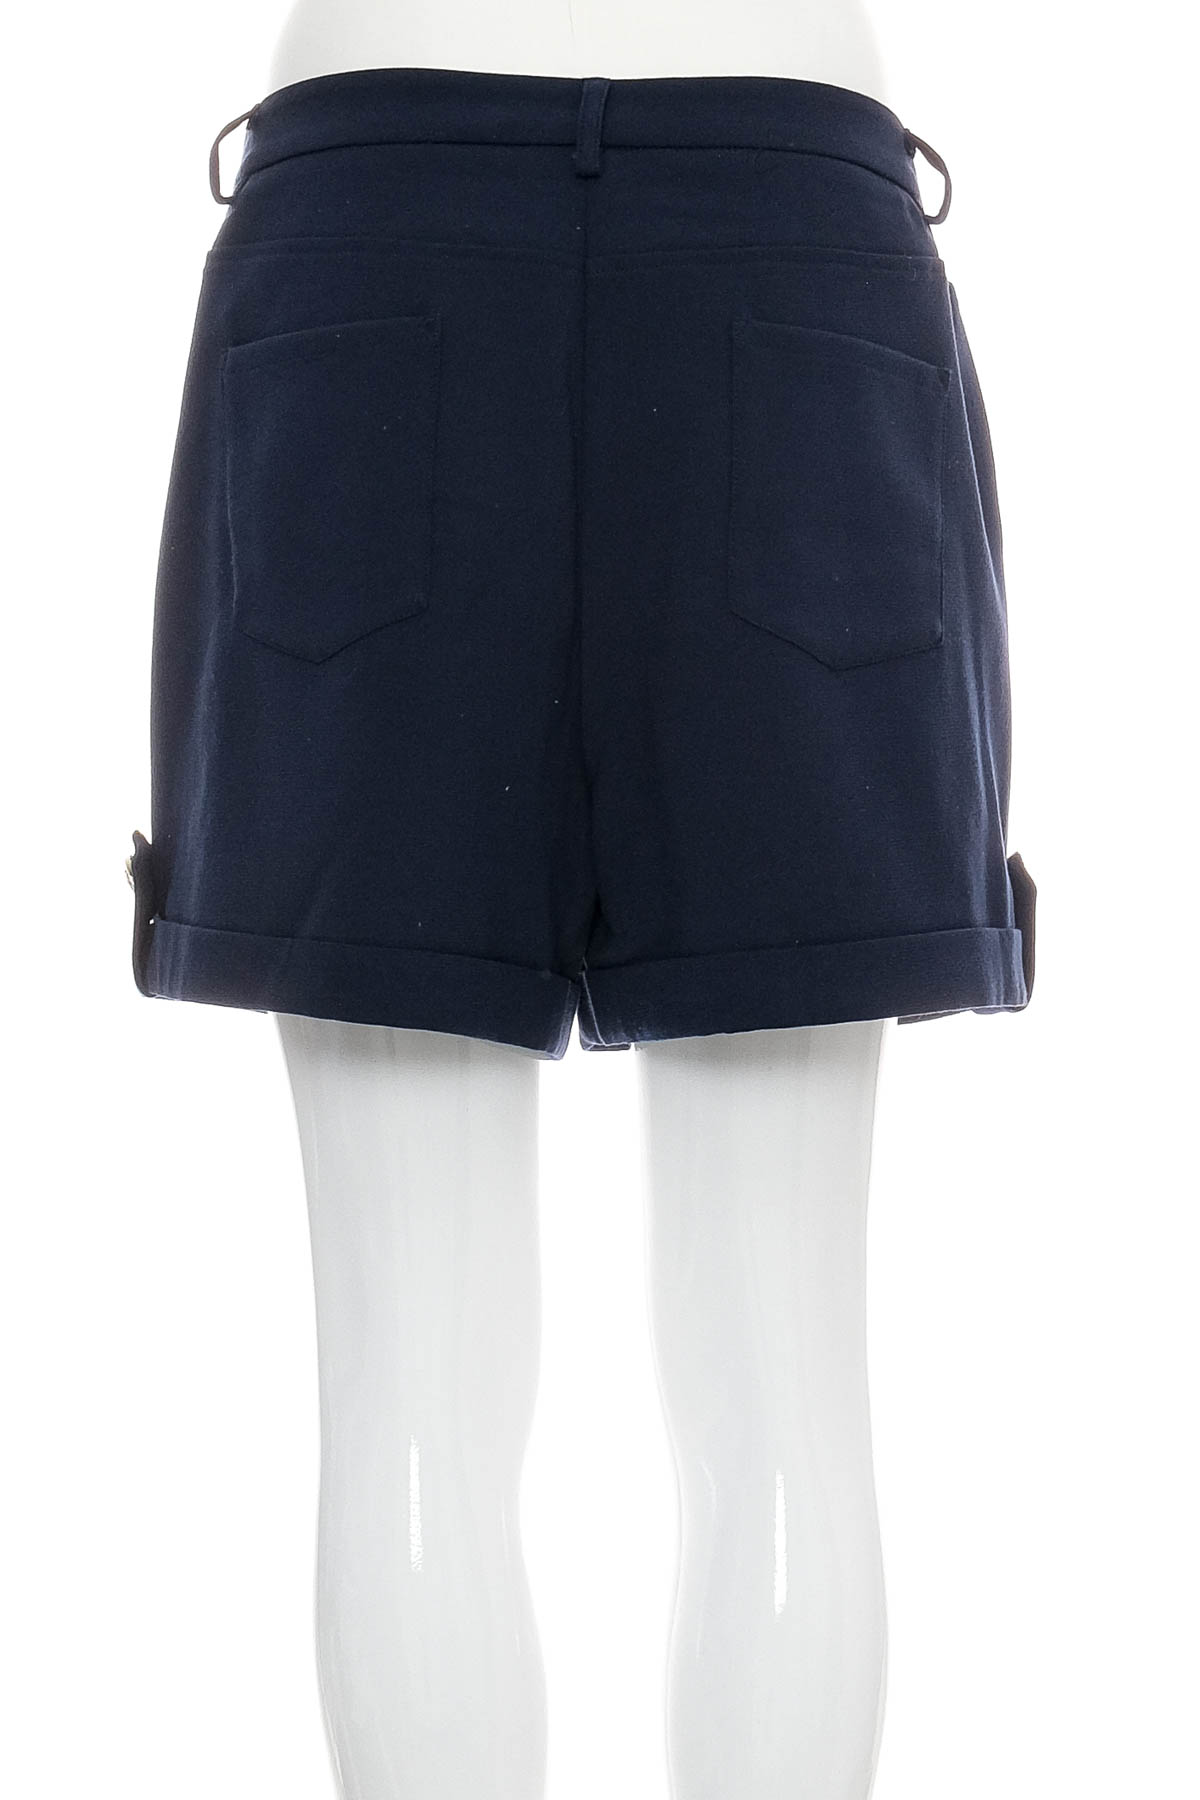 Female shorts - Alba Moda - 1